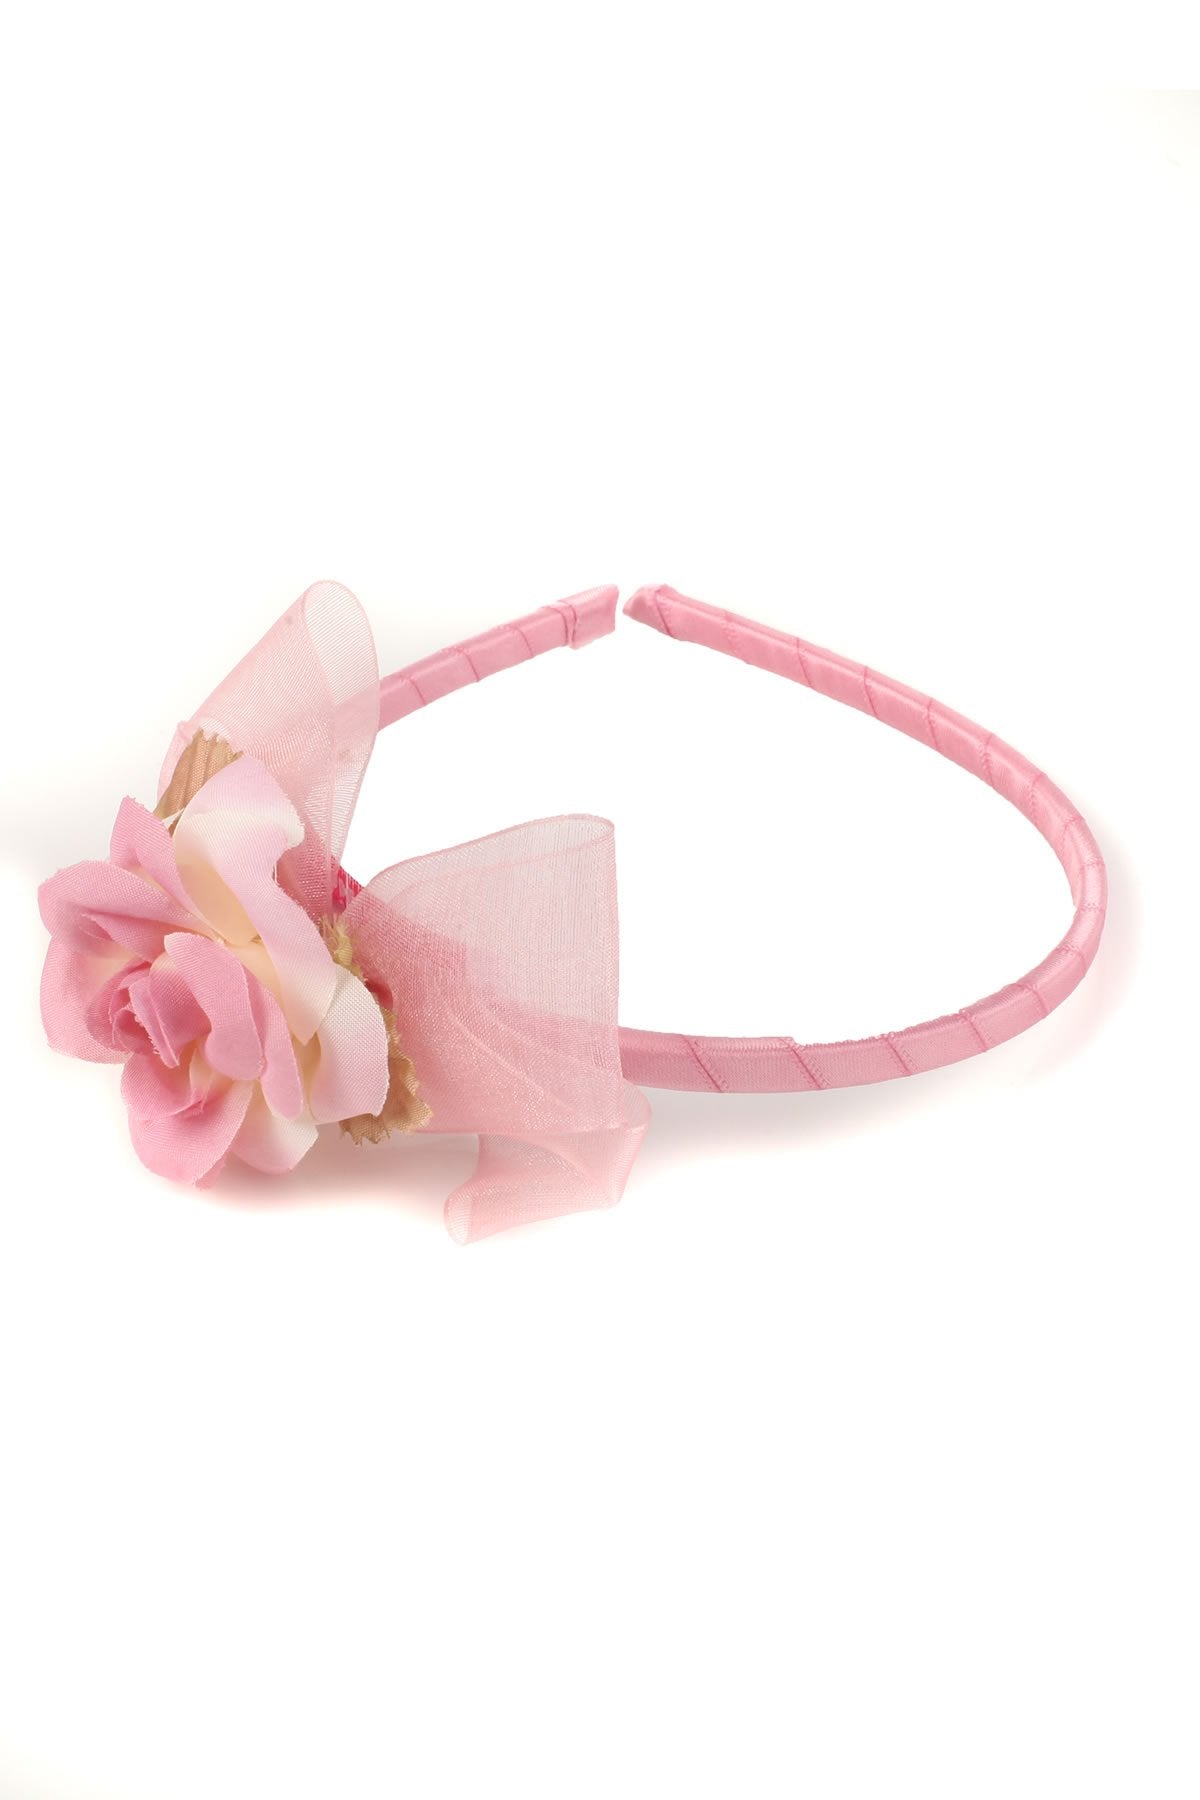 Accessories - Flower & Organza Bow Headband